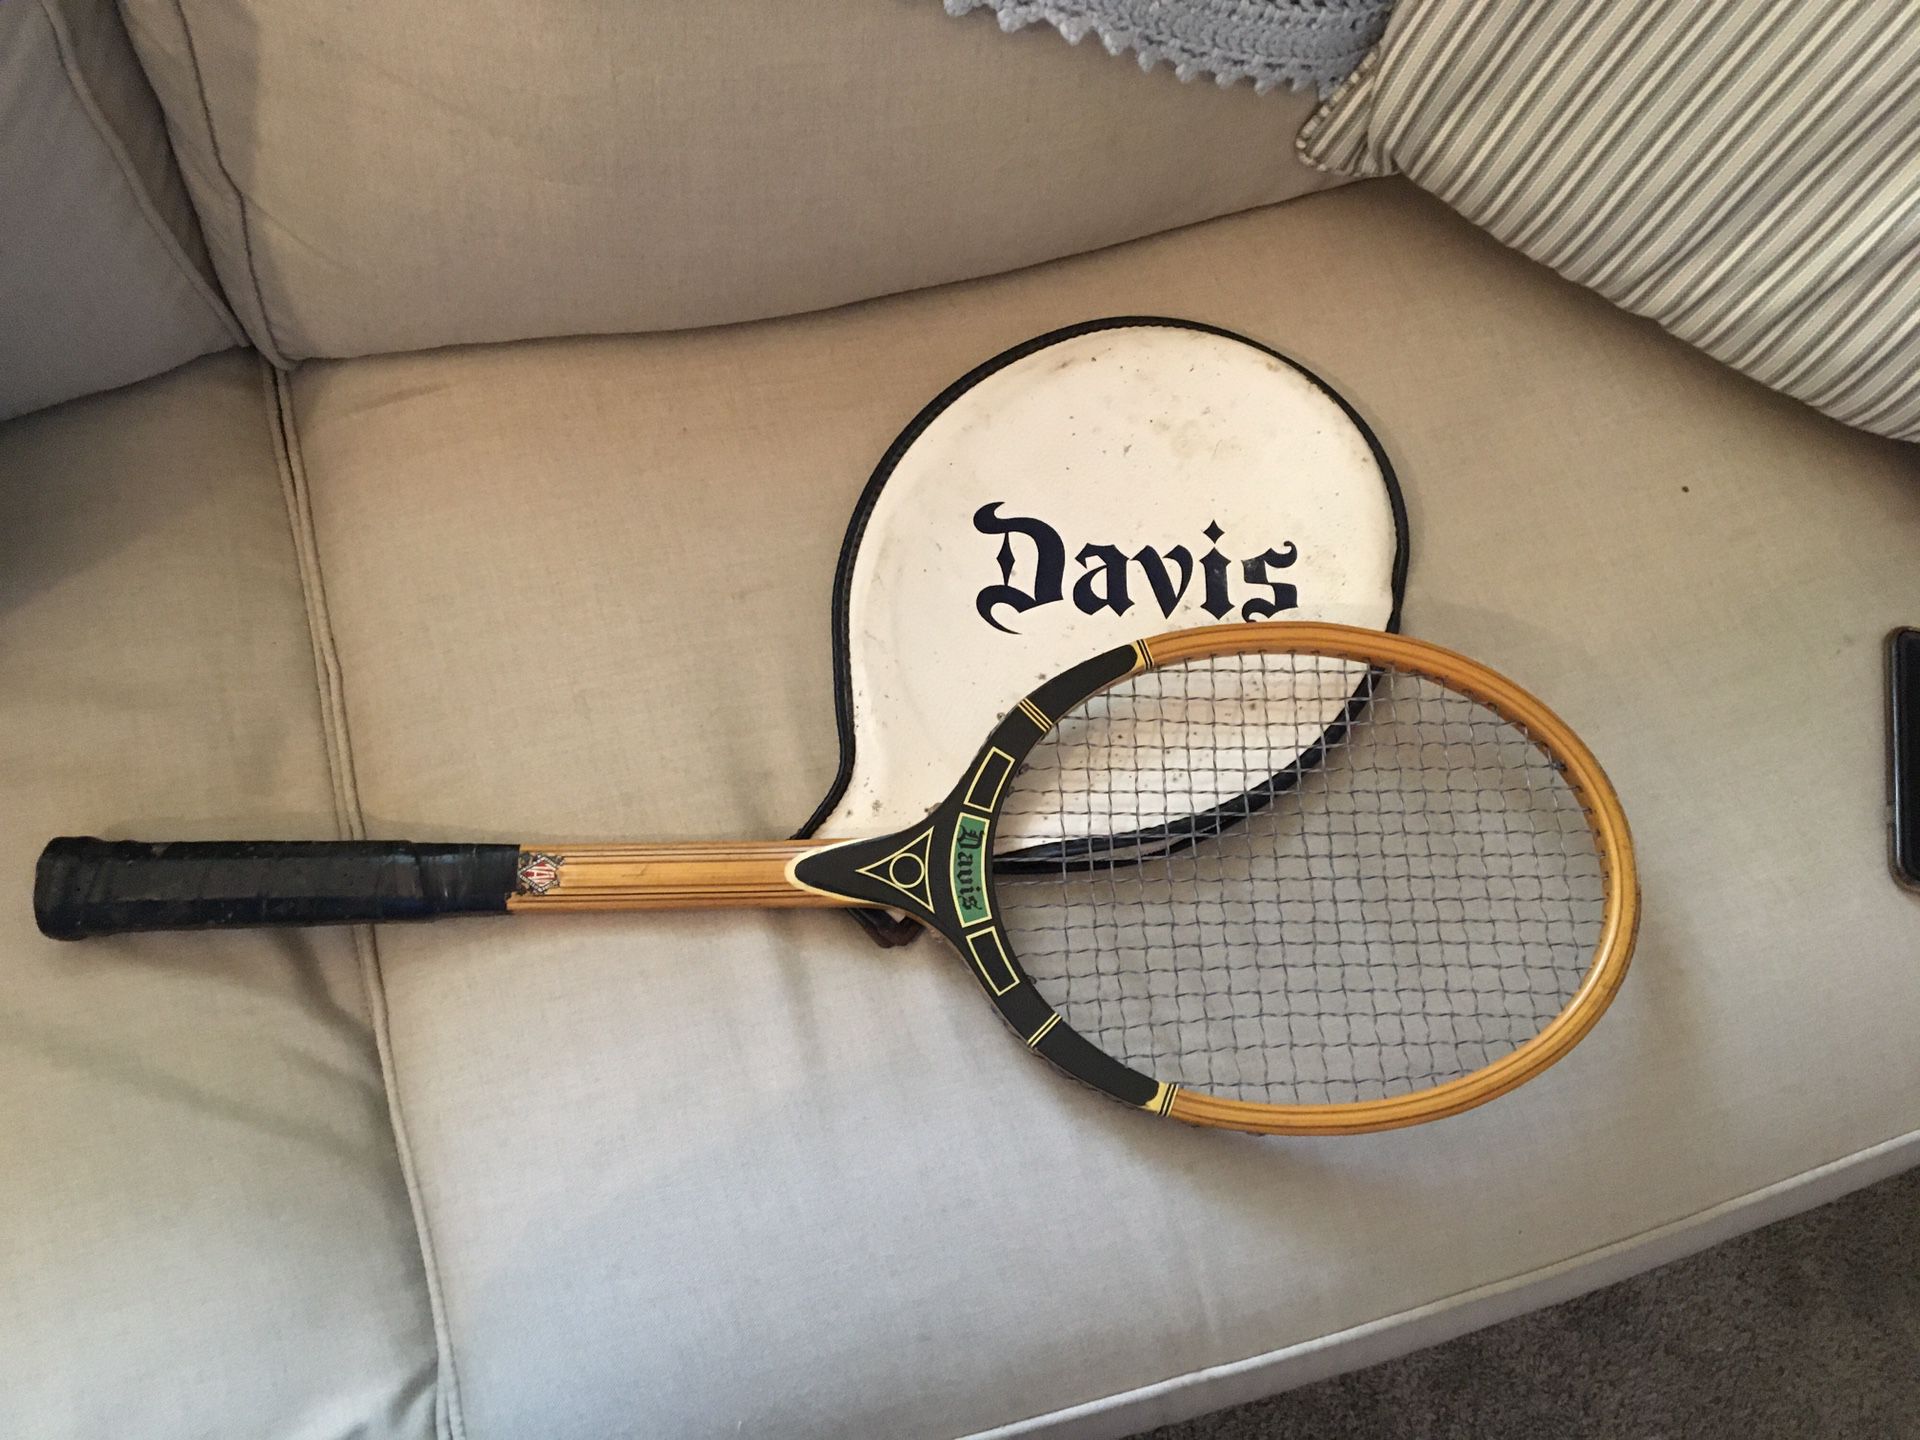 Vintage TAD Davis Tennis Racket w/Cover